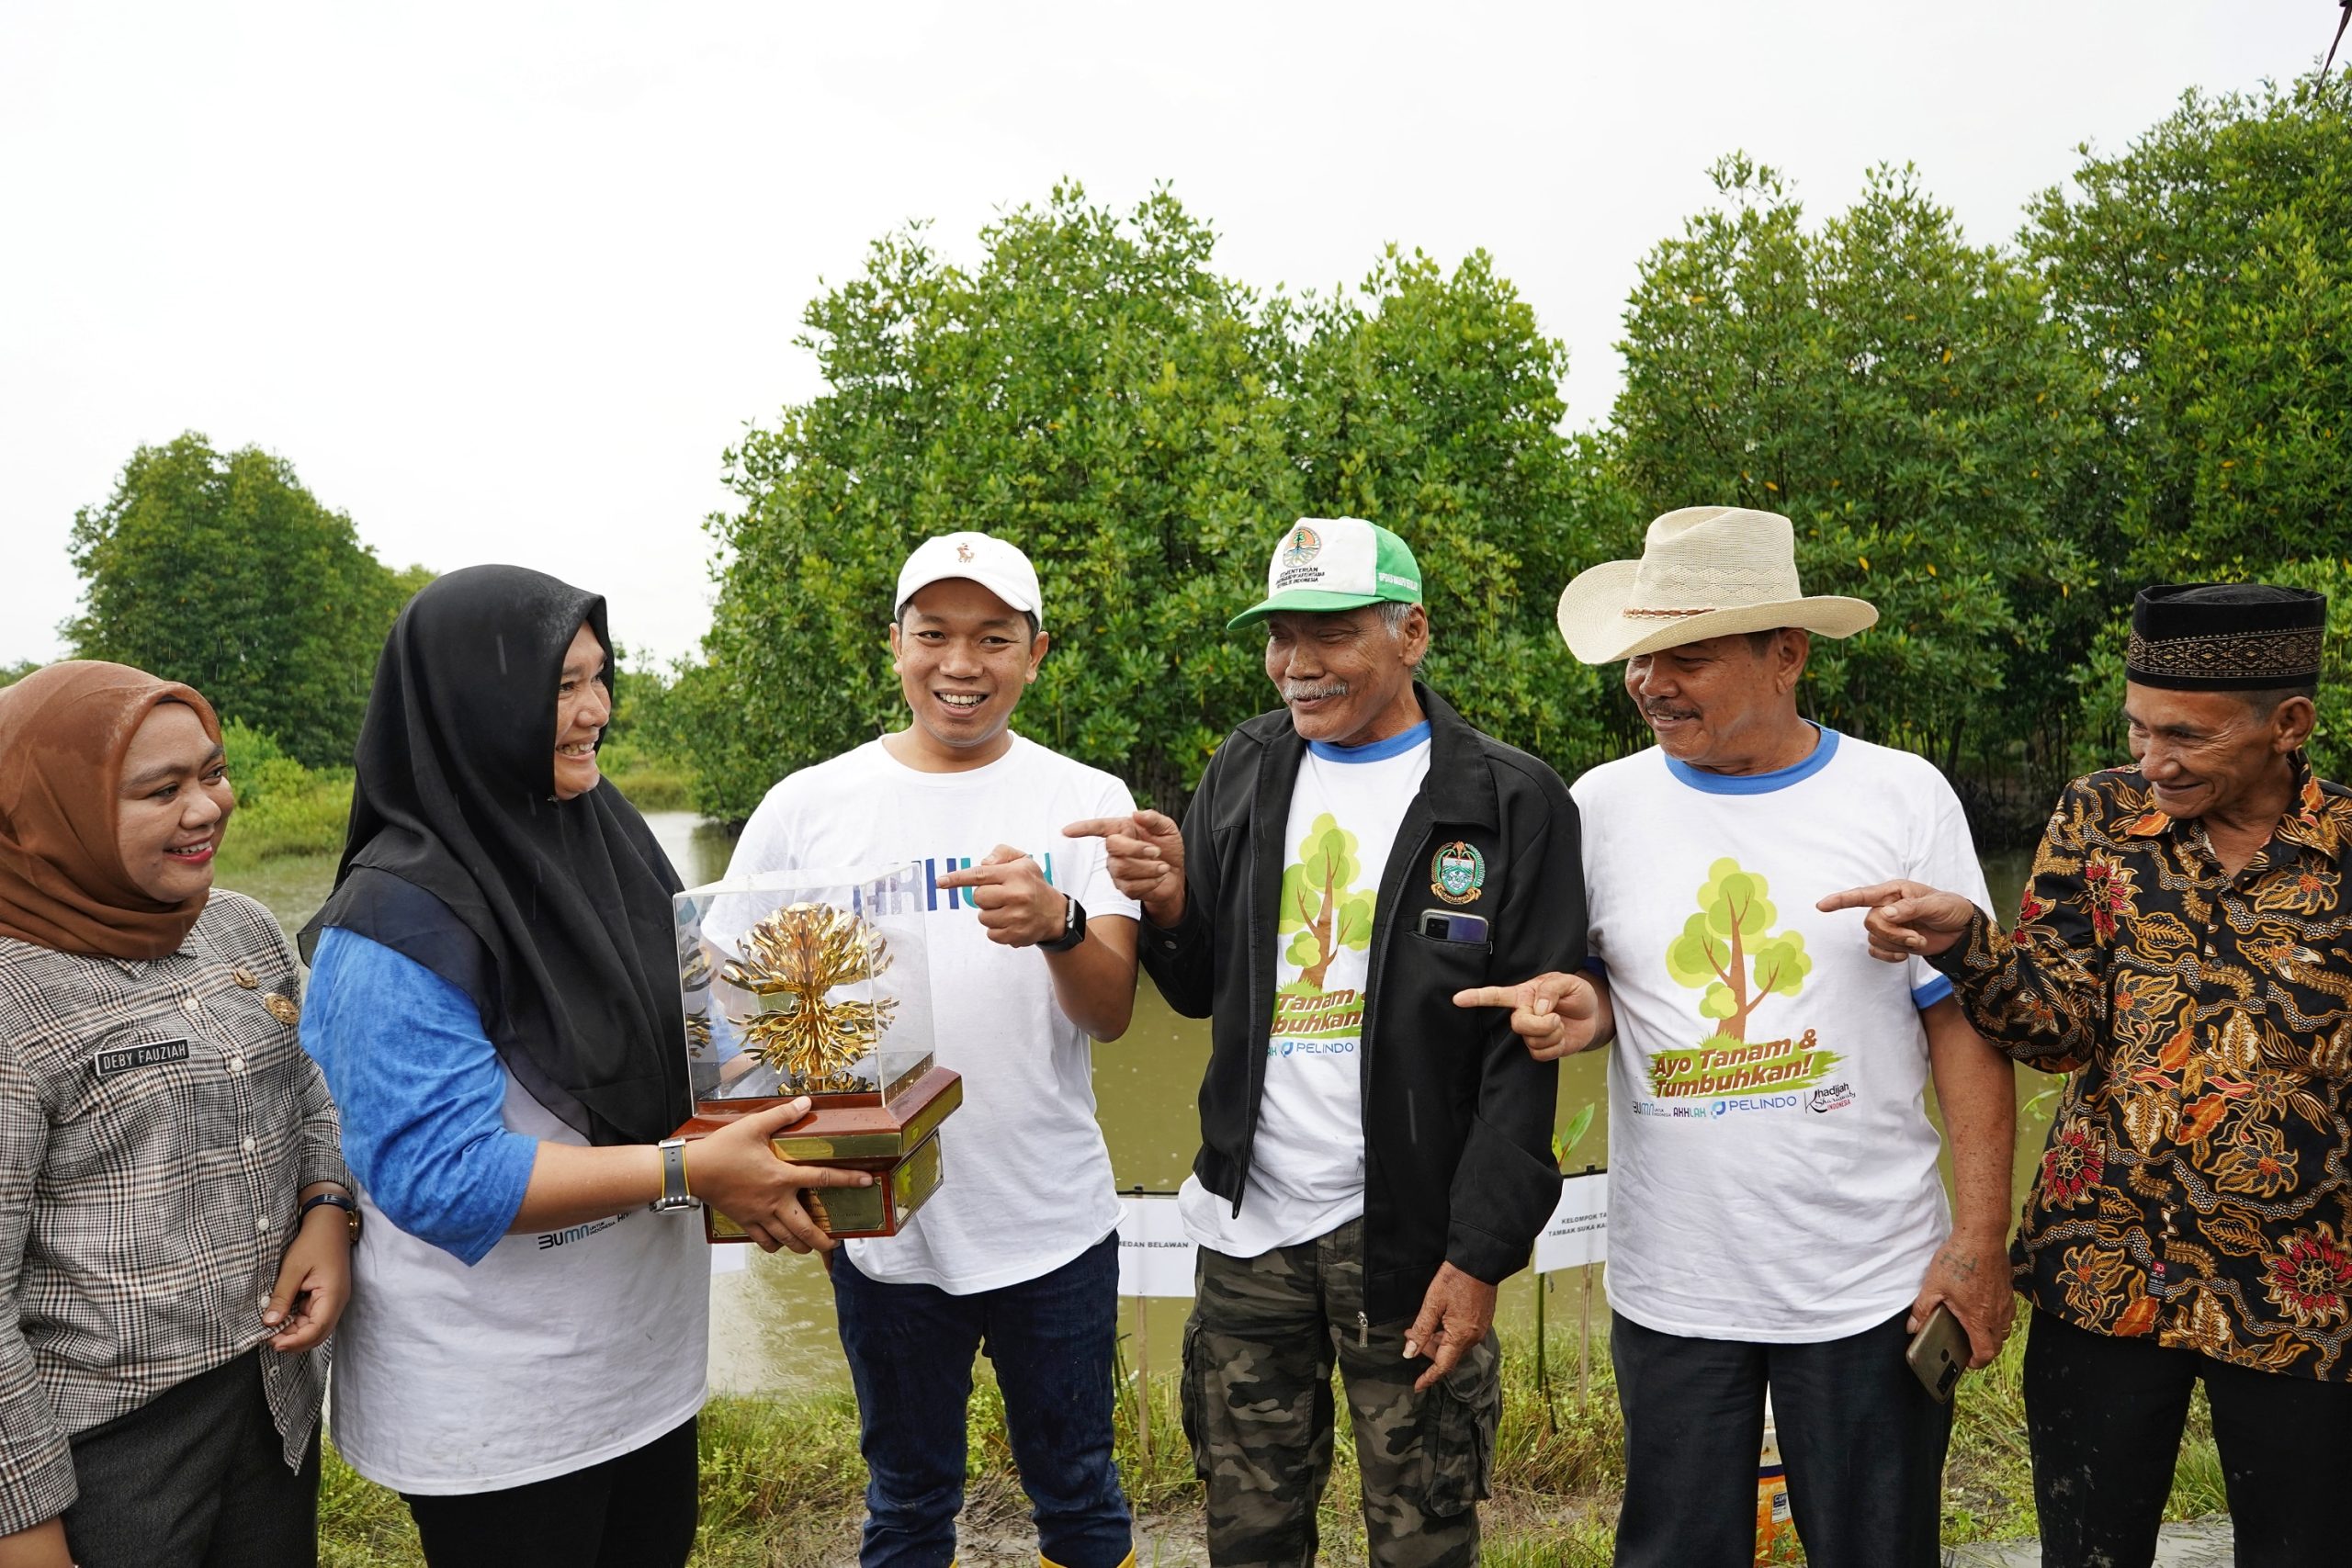 Direktur Utama Pelindo Multi Terminal, Drajat Sulistyo, perwakilan dari Regional Head 1 PT Pelabuhan Indonesia (Persero), Kasih Dwiyanti, Camat Belawan, Subhan Fajri Harahap, dan para Penggiat Lingkungan penerima Kalpataru yg berasal dari Sumatera Utara, bersama-sama menanam 1000 bibit mangrove di area Hutan Mangrove/Budidaya Sicanang, Belawan, pada Jum'at, 9 Desember 2022.